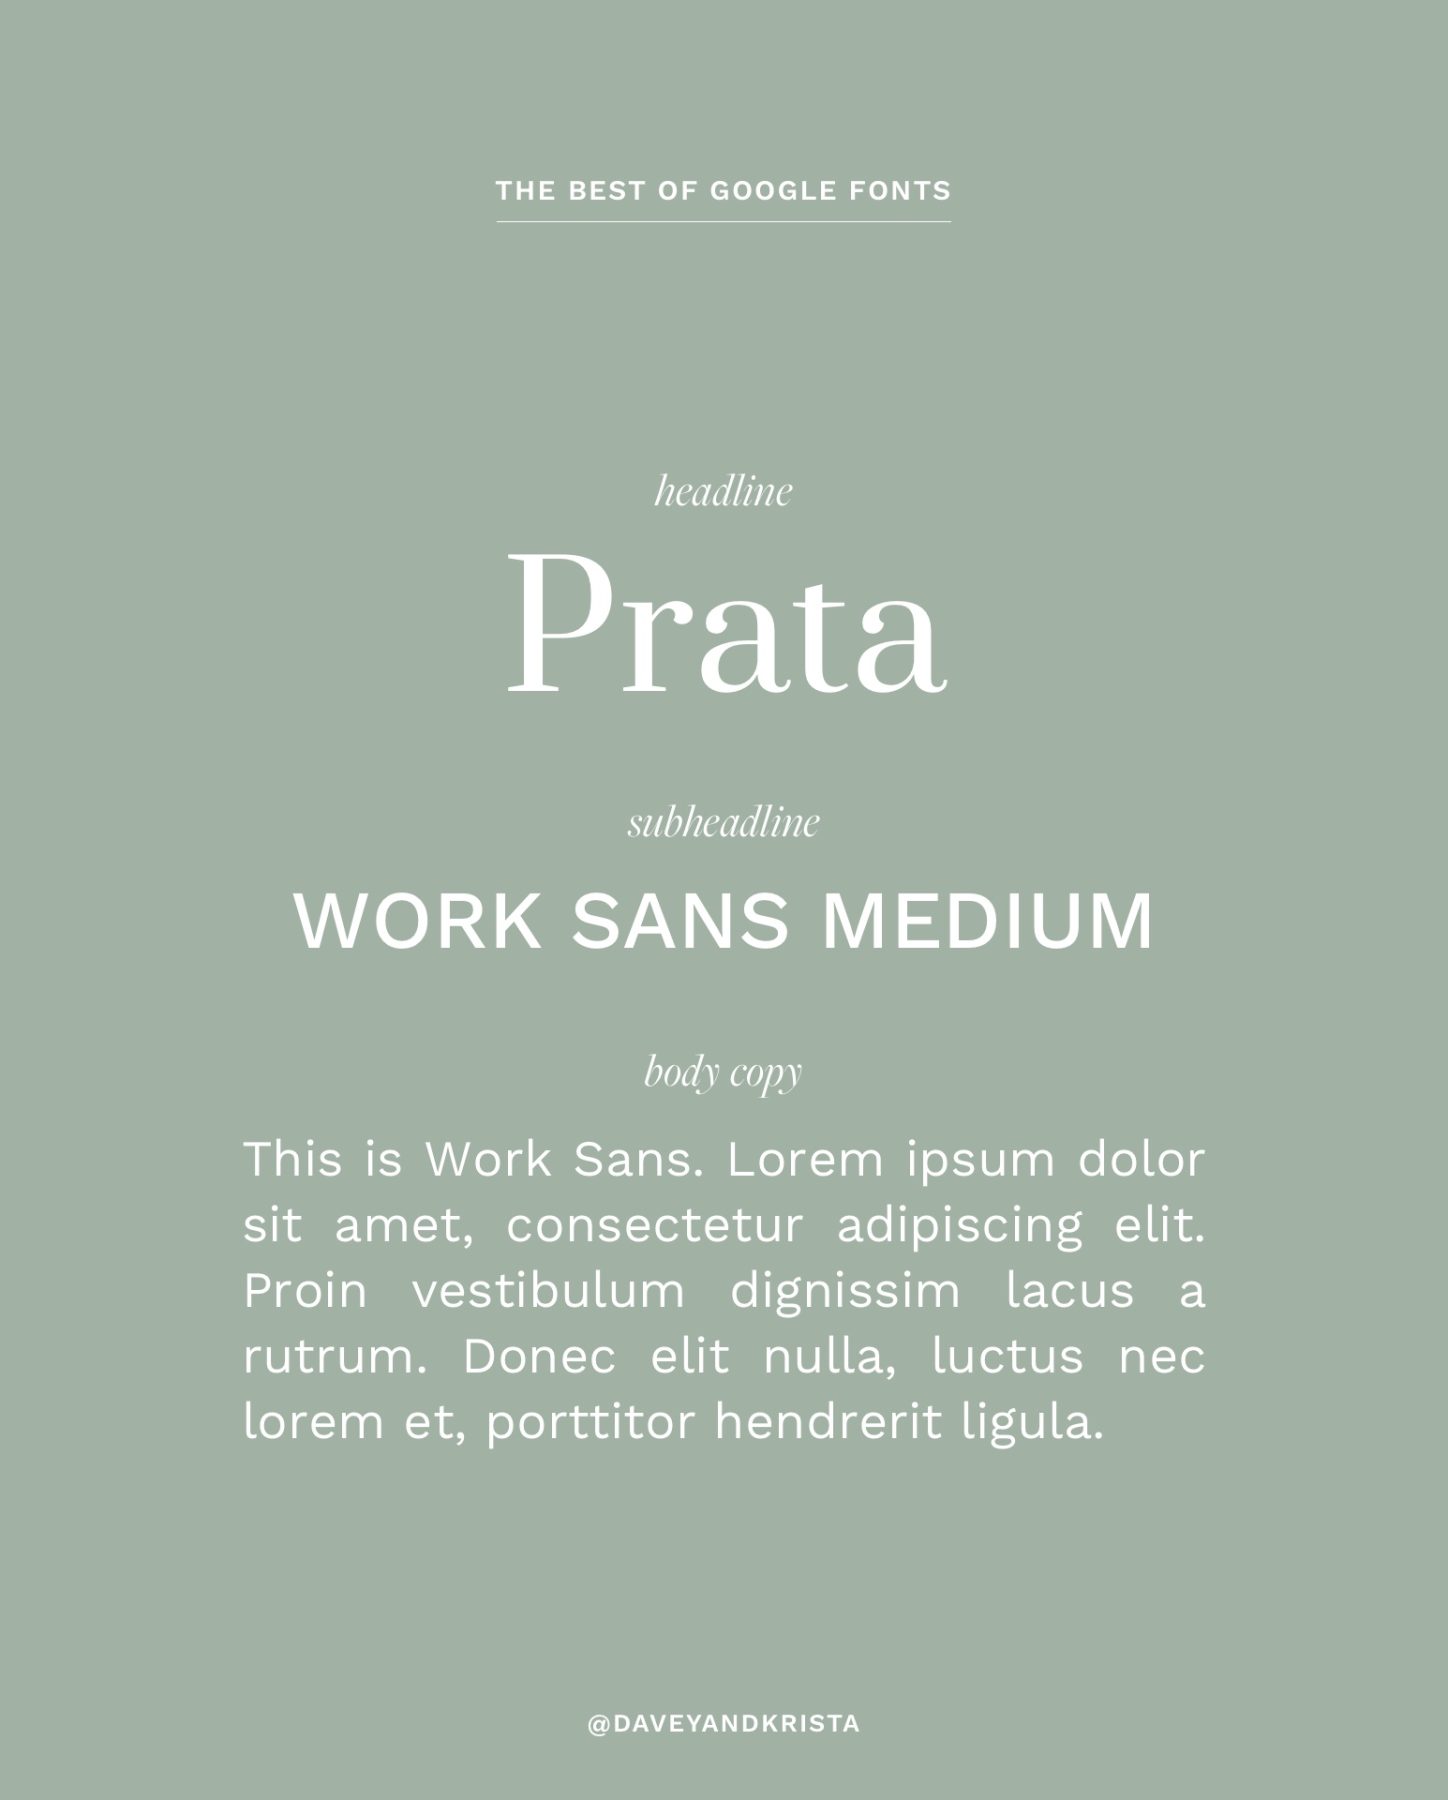 The best of Google Fonts: Prata + Work Sans Medium | Via Davey & Krista